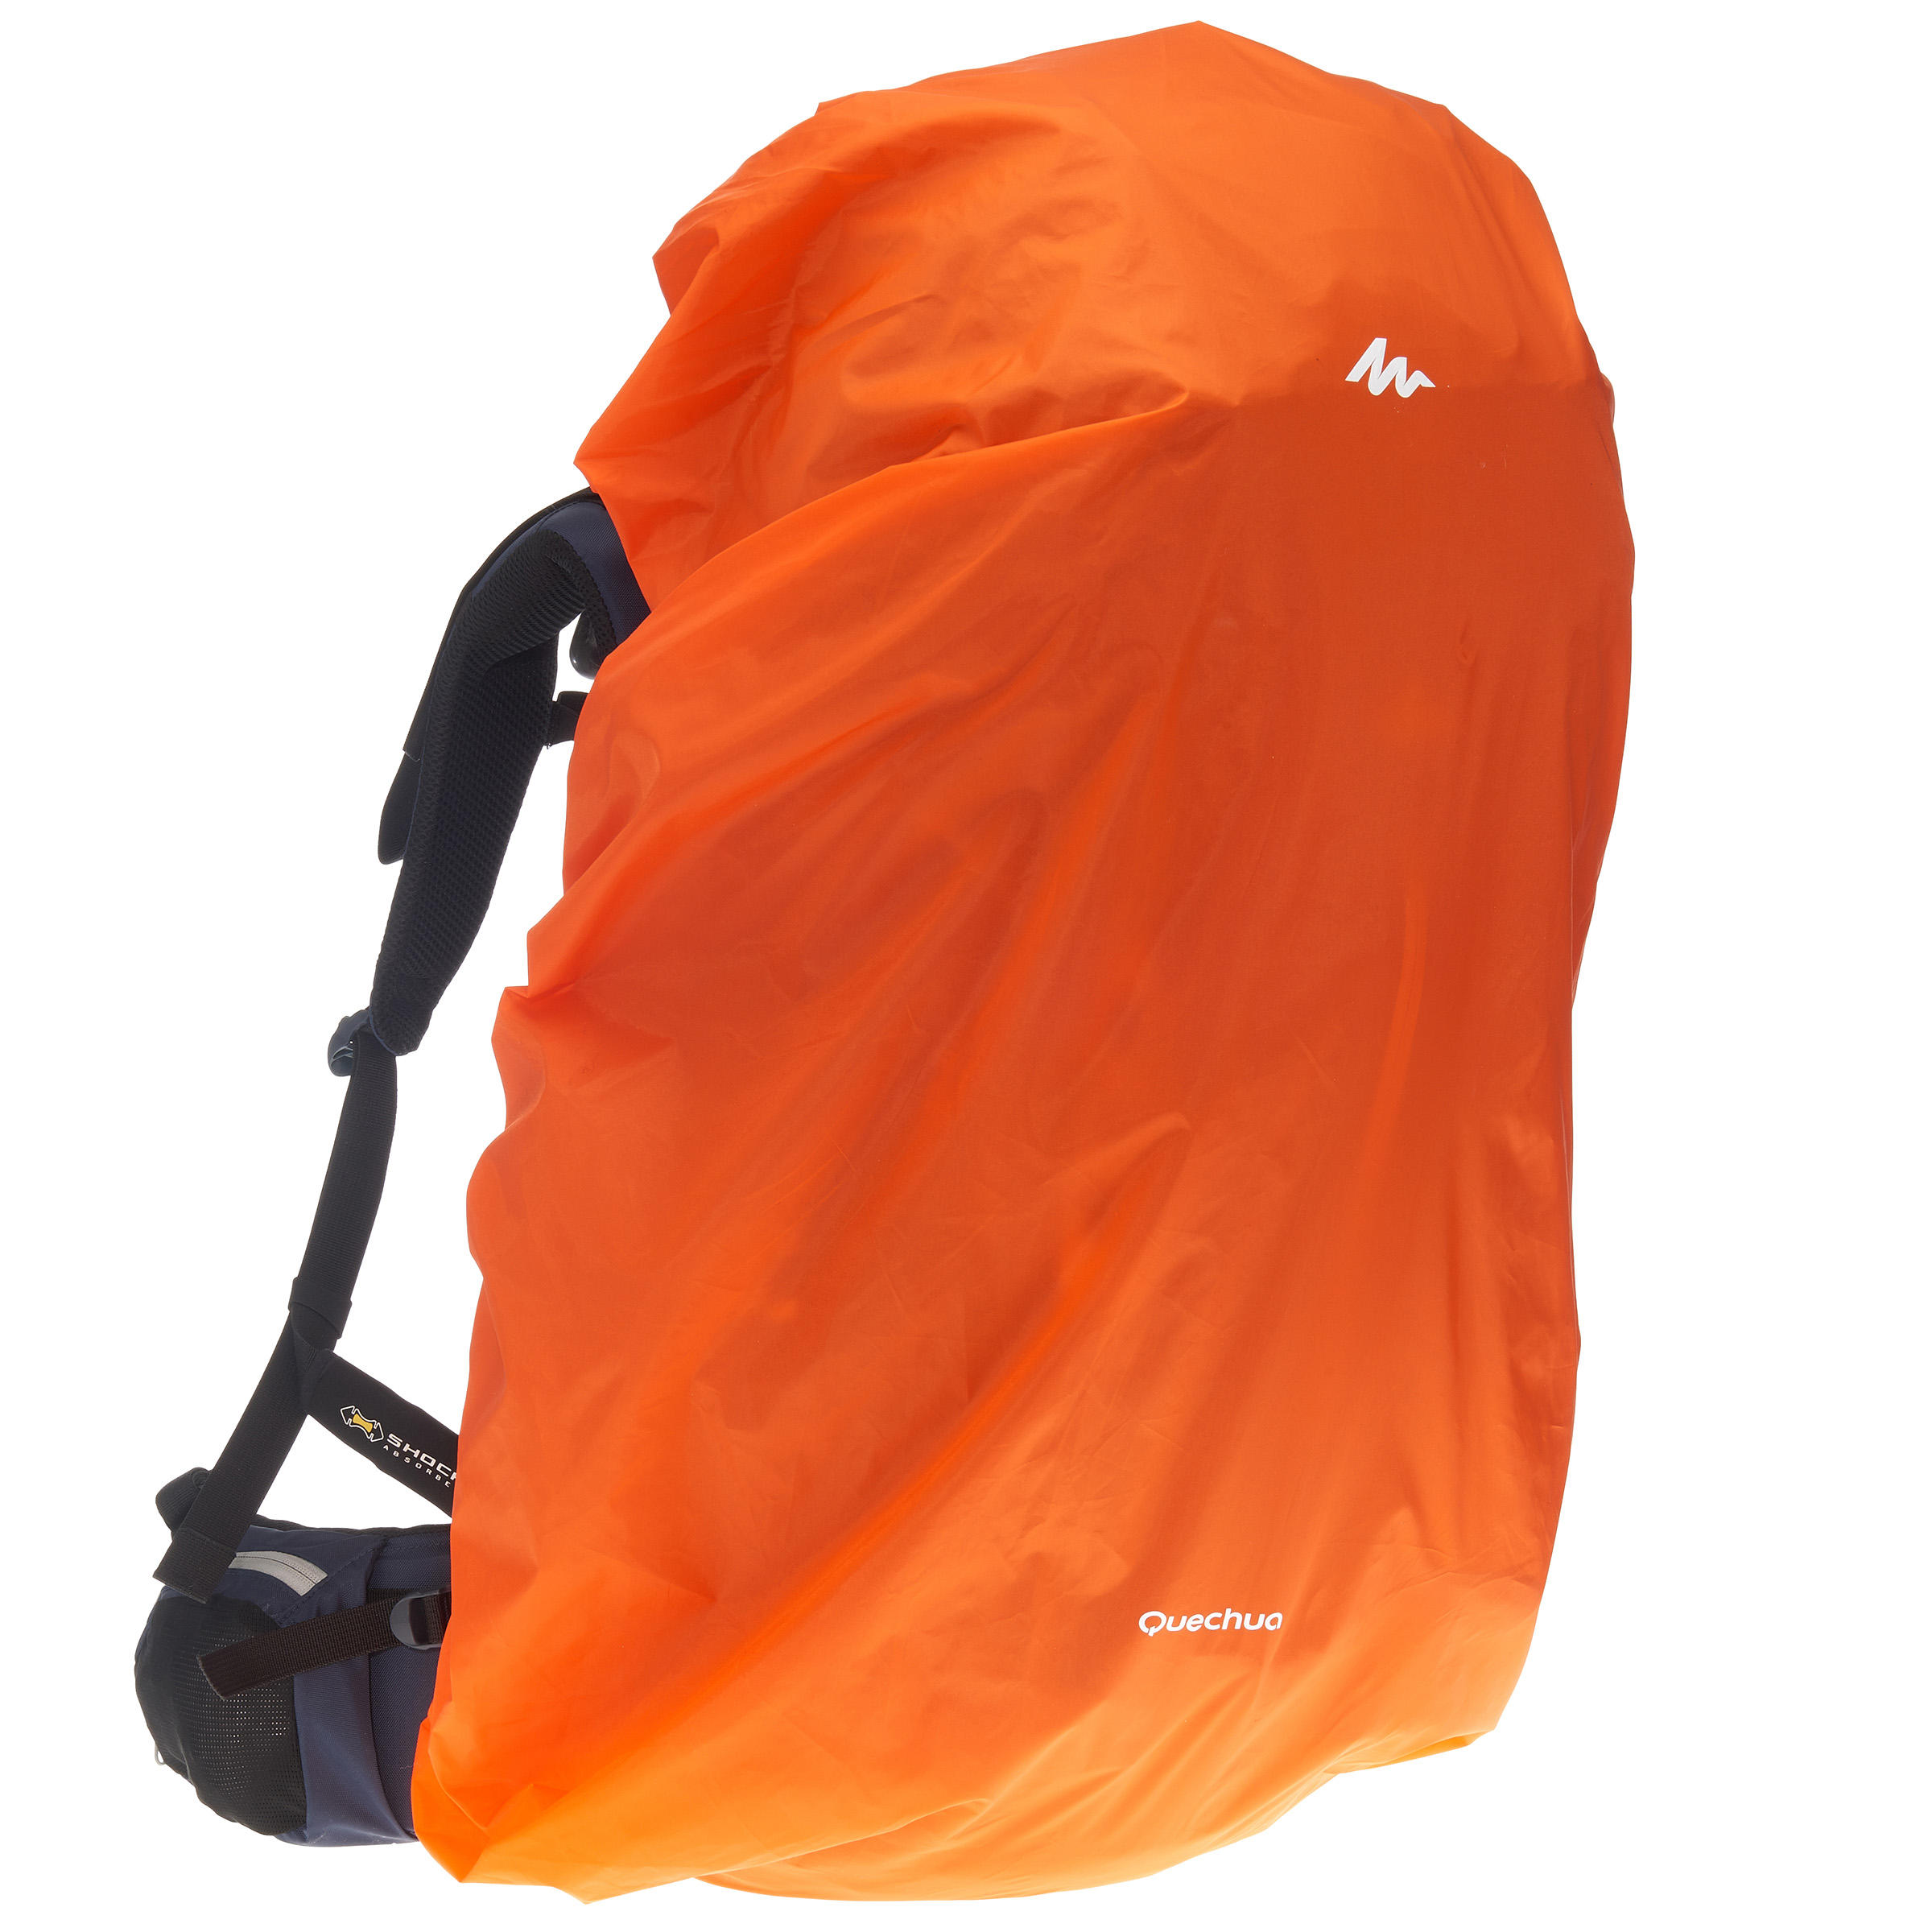 quechua orange bag